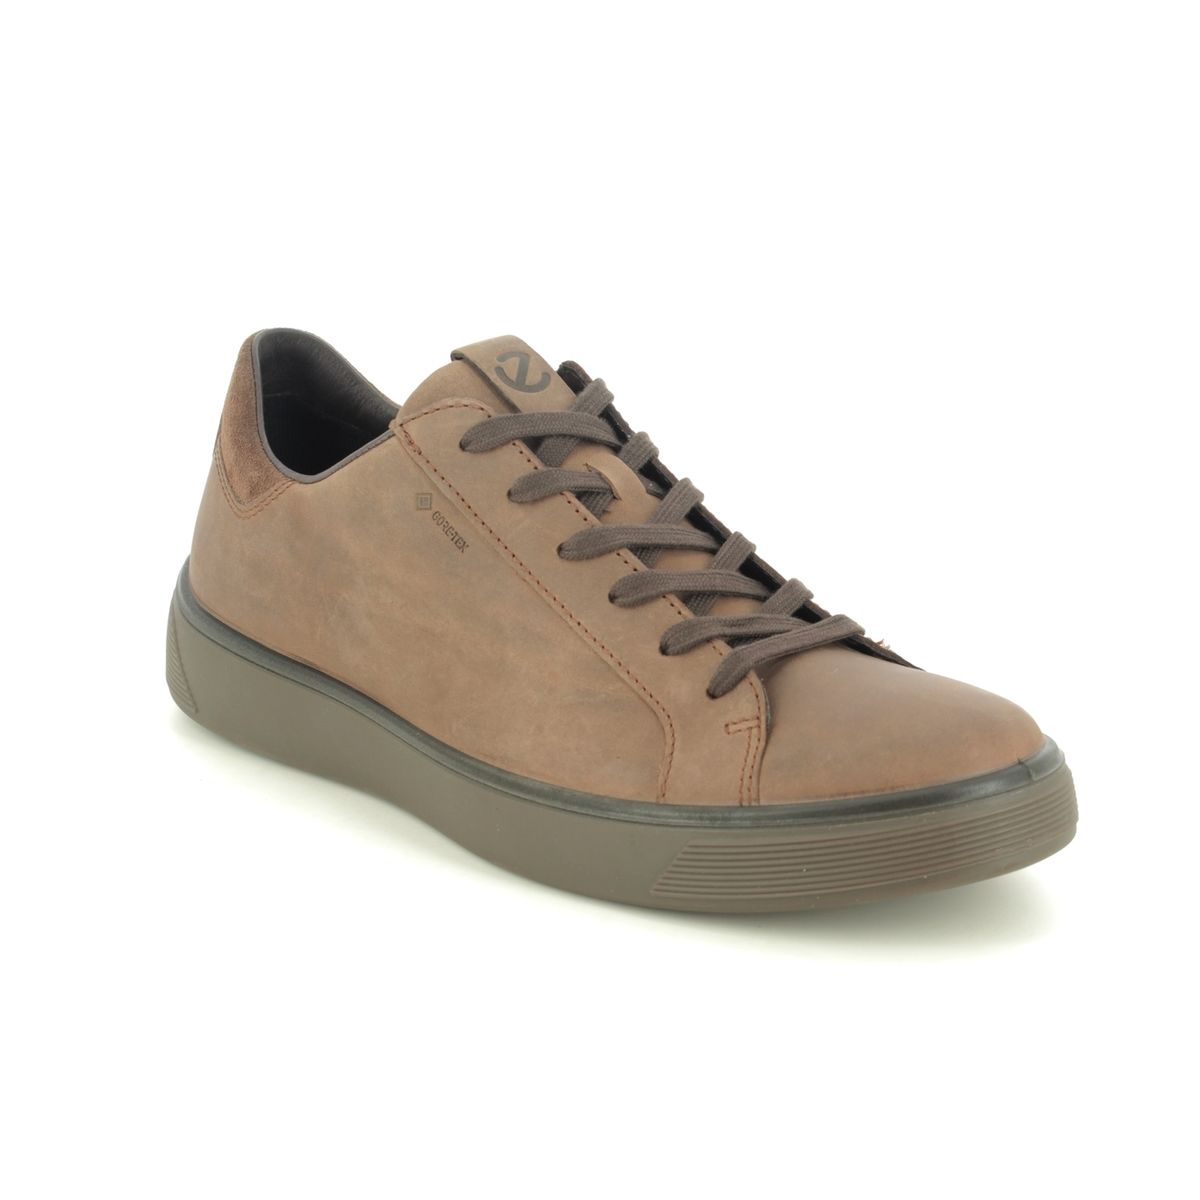 Ecco Street Tray Gtx Brown Nubuck Mens Comfort Shoes 504574-55778 In Size 42 In Plain Brown Nubuck